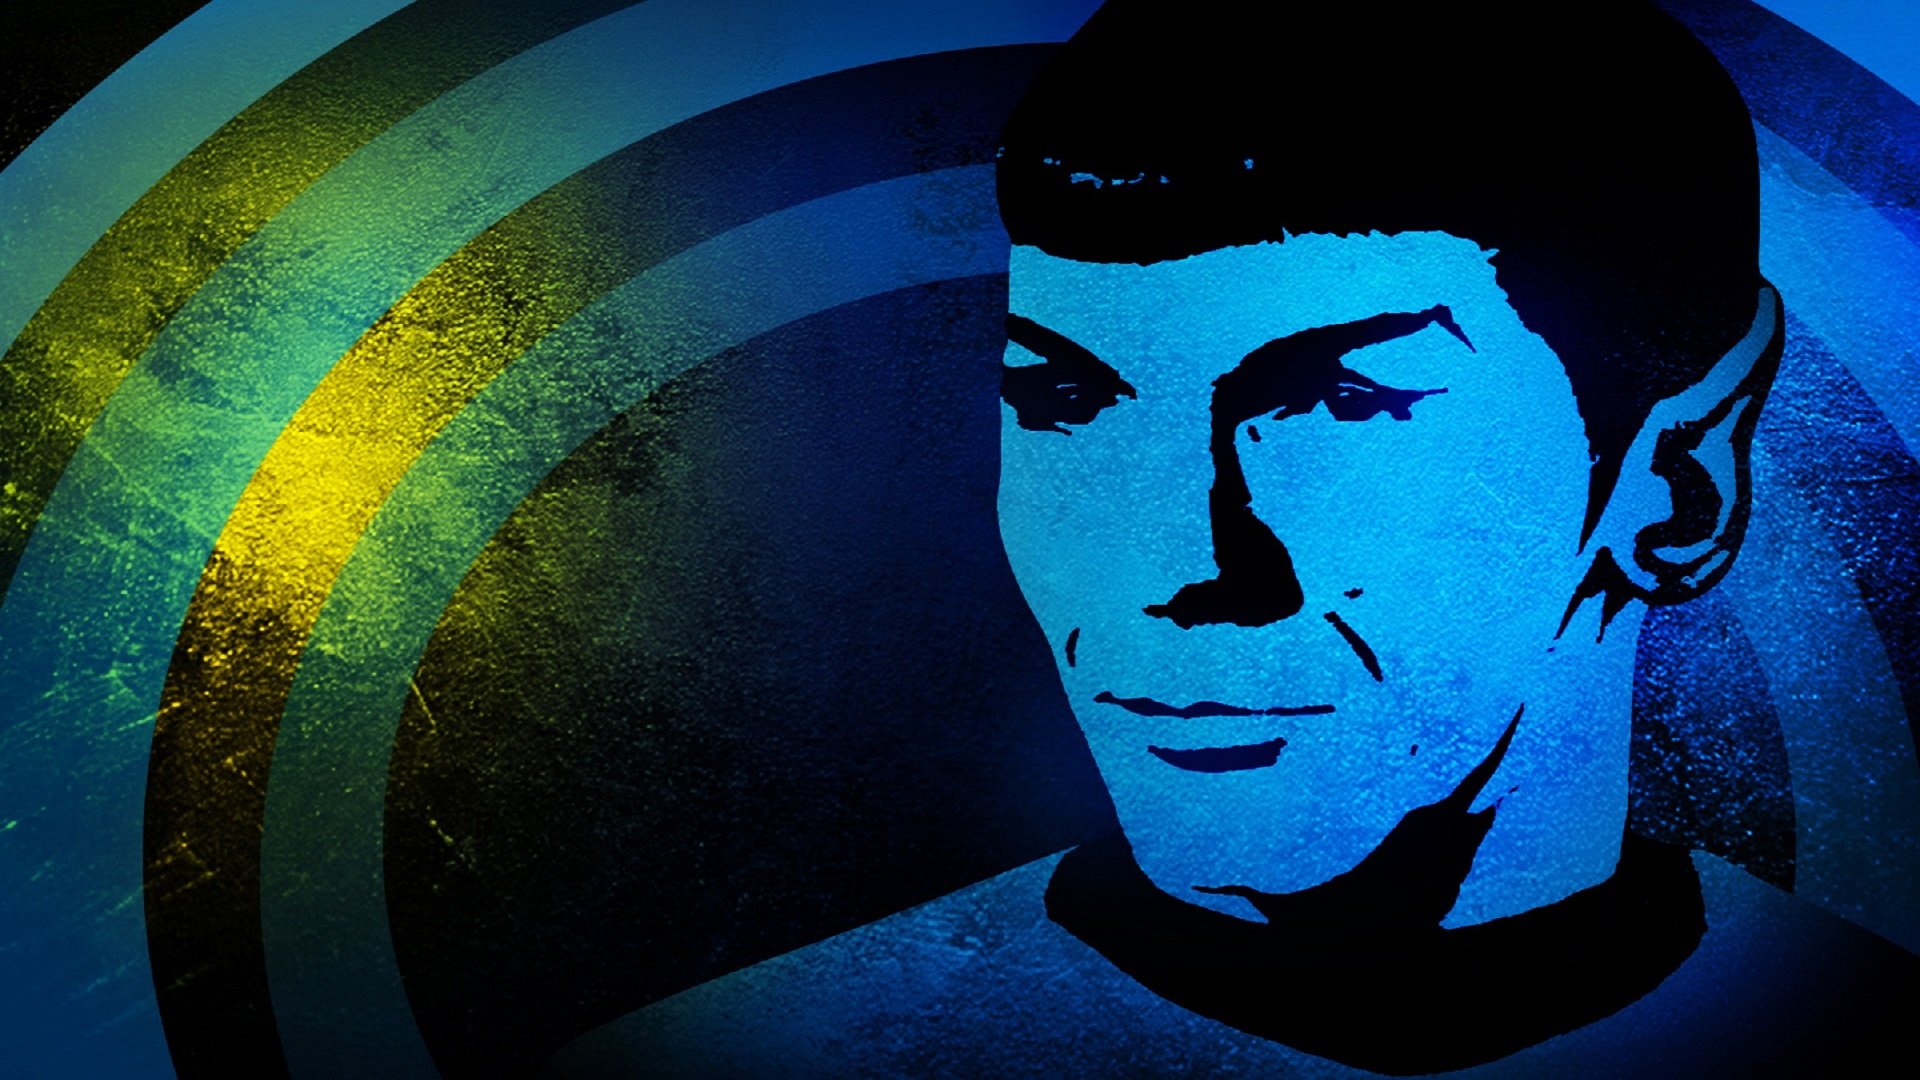 High resolution Star Trek: The Original Series full hd 1920x1080 background ID:198087 for desktop